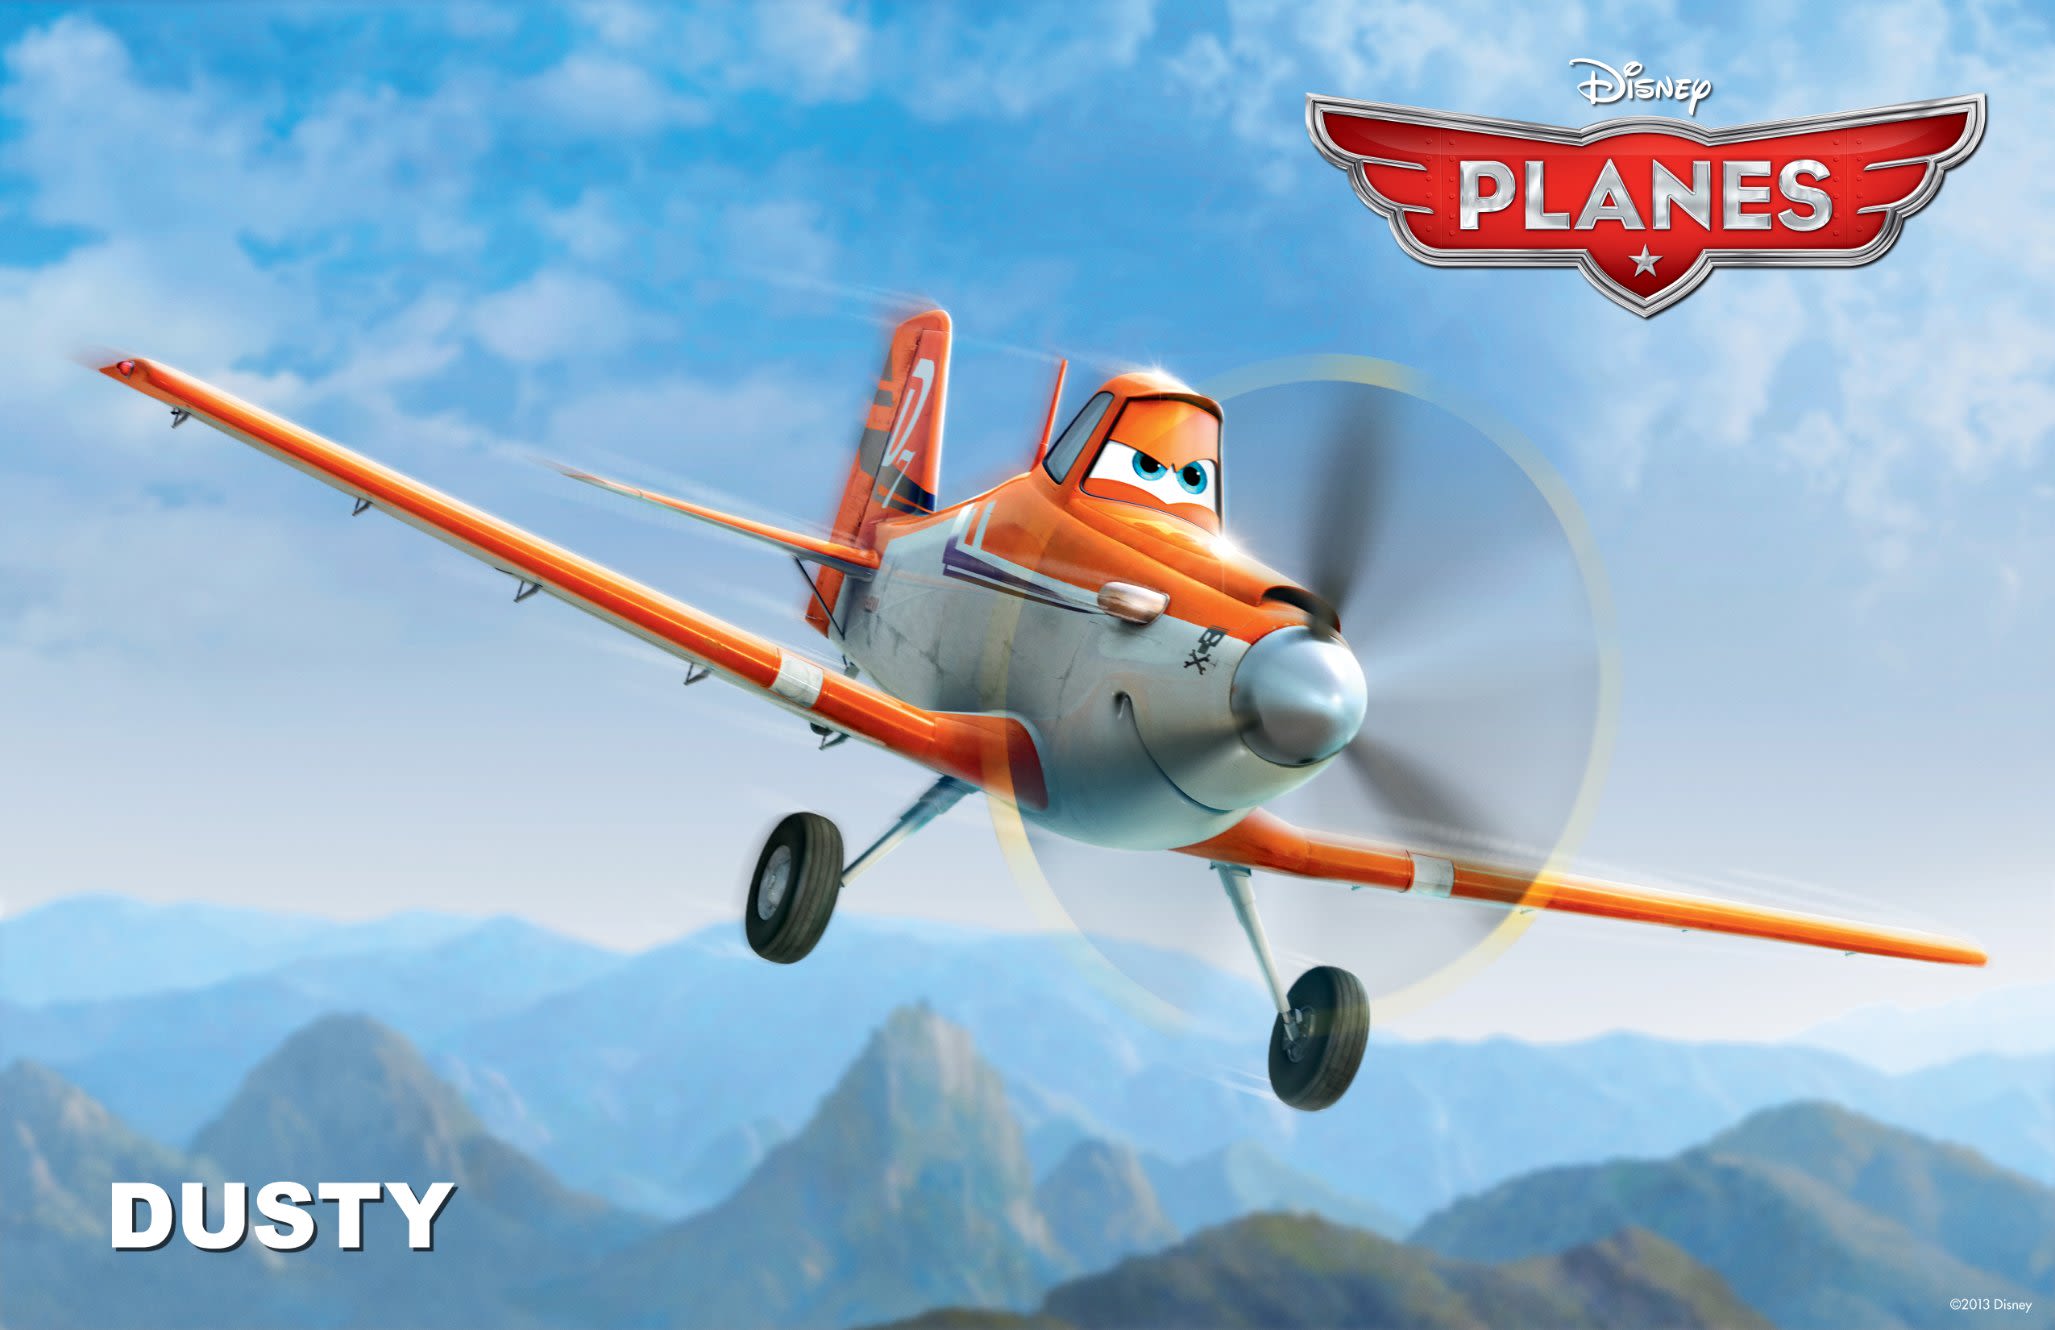 Meet the pilot who kept Disney\'s film \'Planes\' flying right | CNN